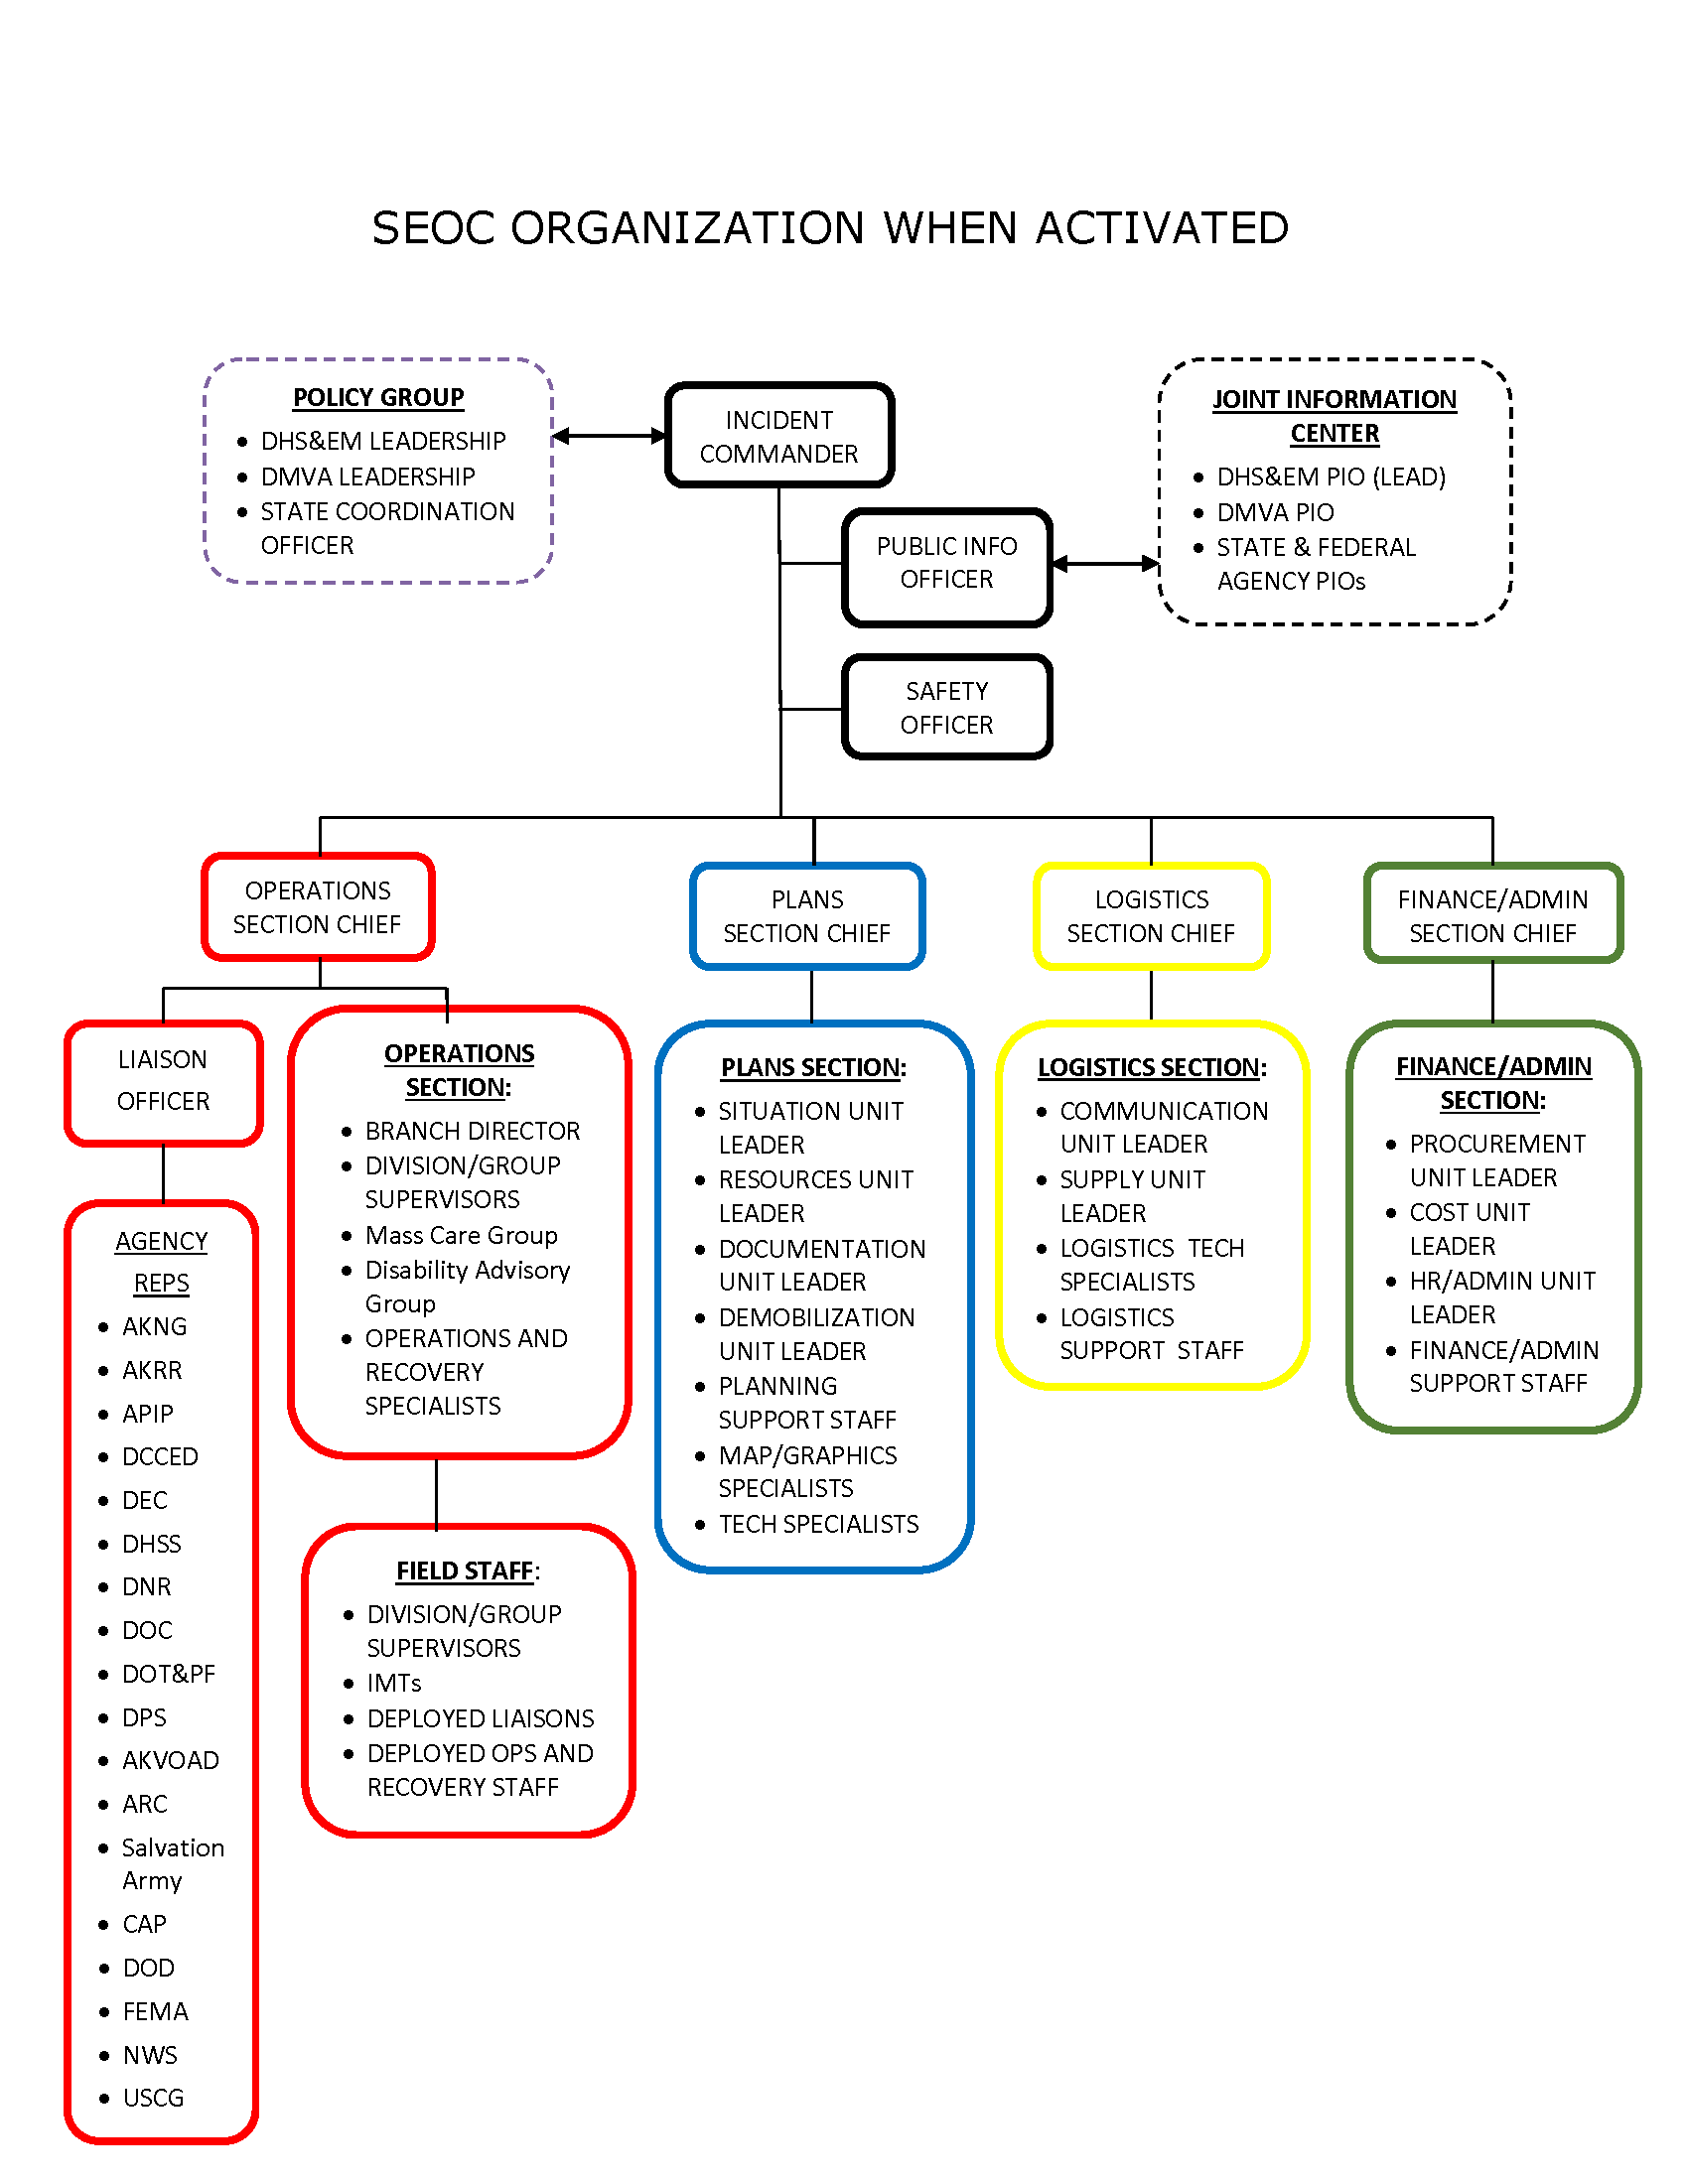 SEOC organizational structure